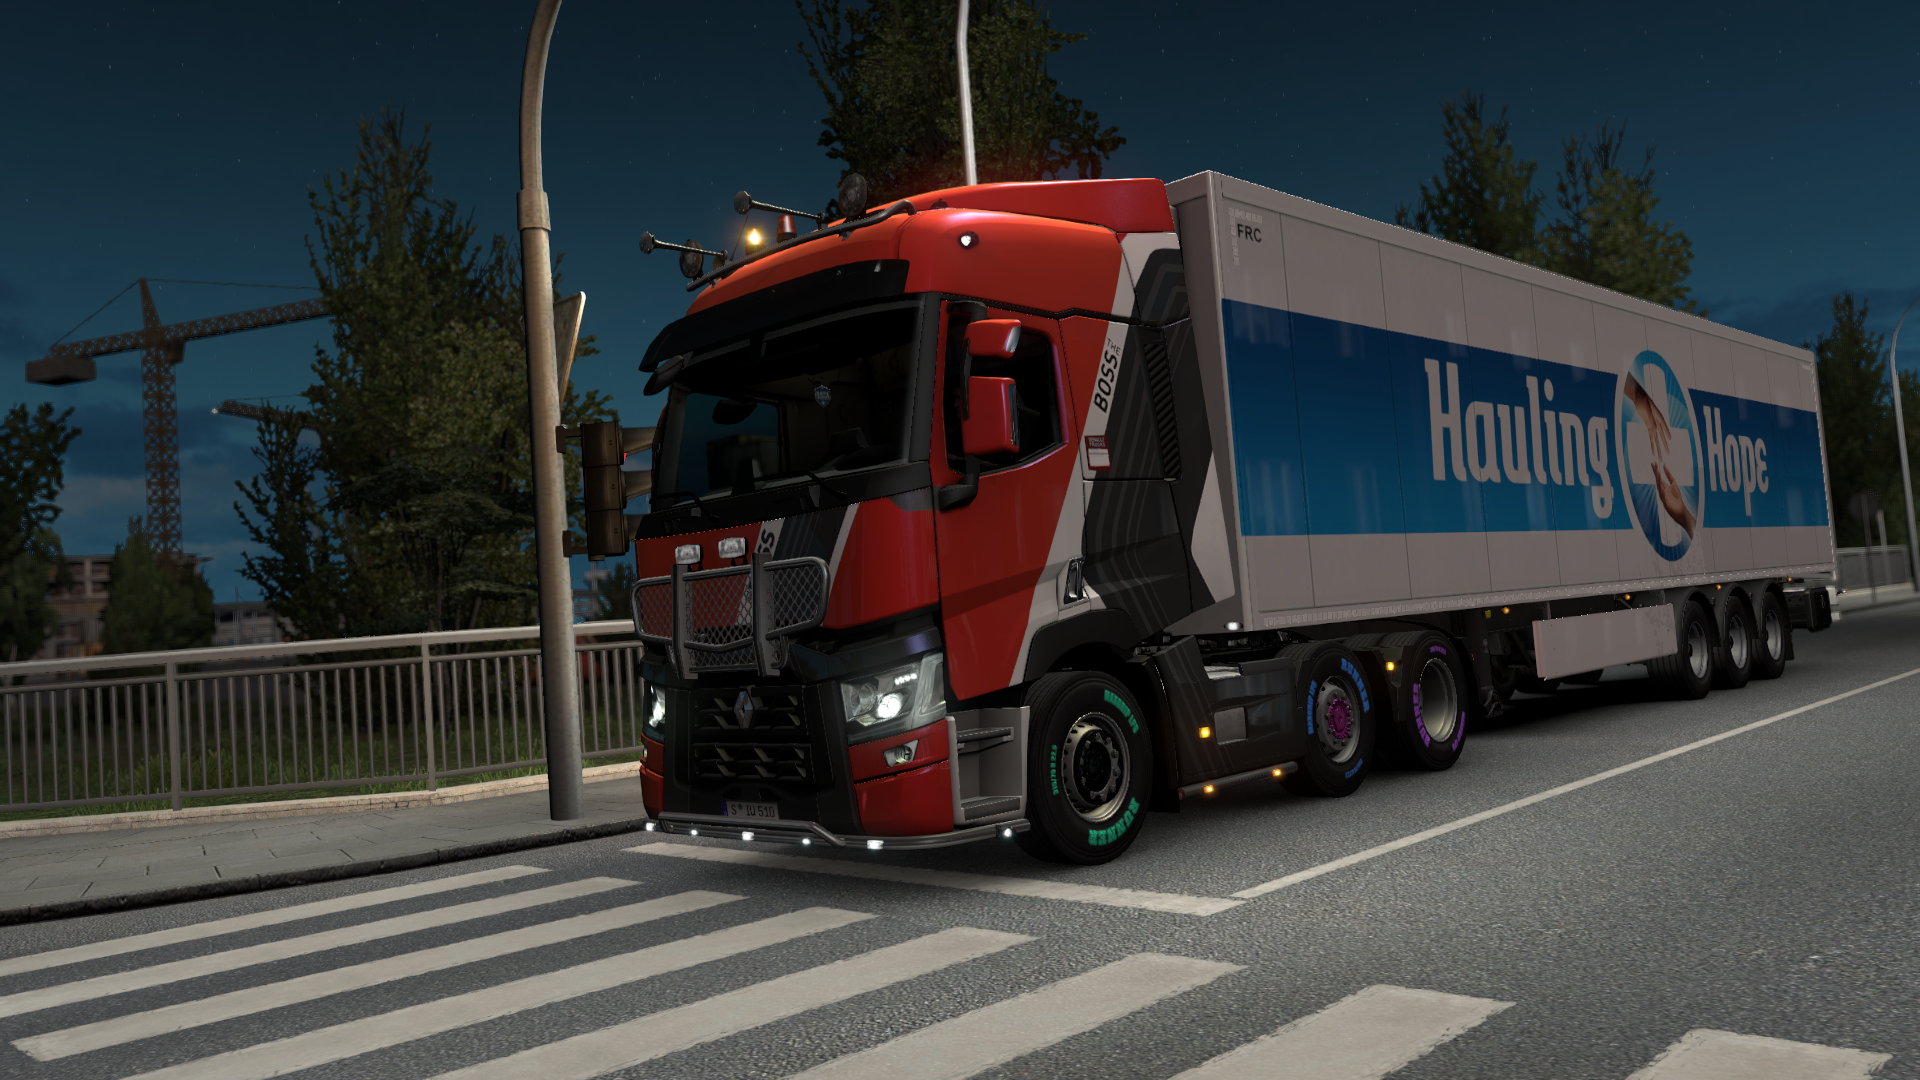 Euro Truck Simulator Euro Truck Simulator 2 ETS2 Truck Video Games CGi 1920x1080